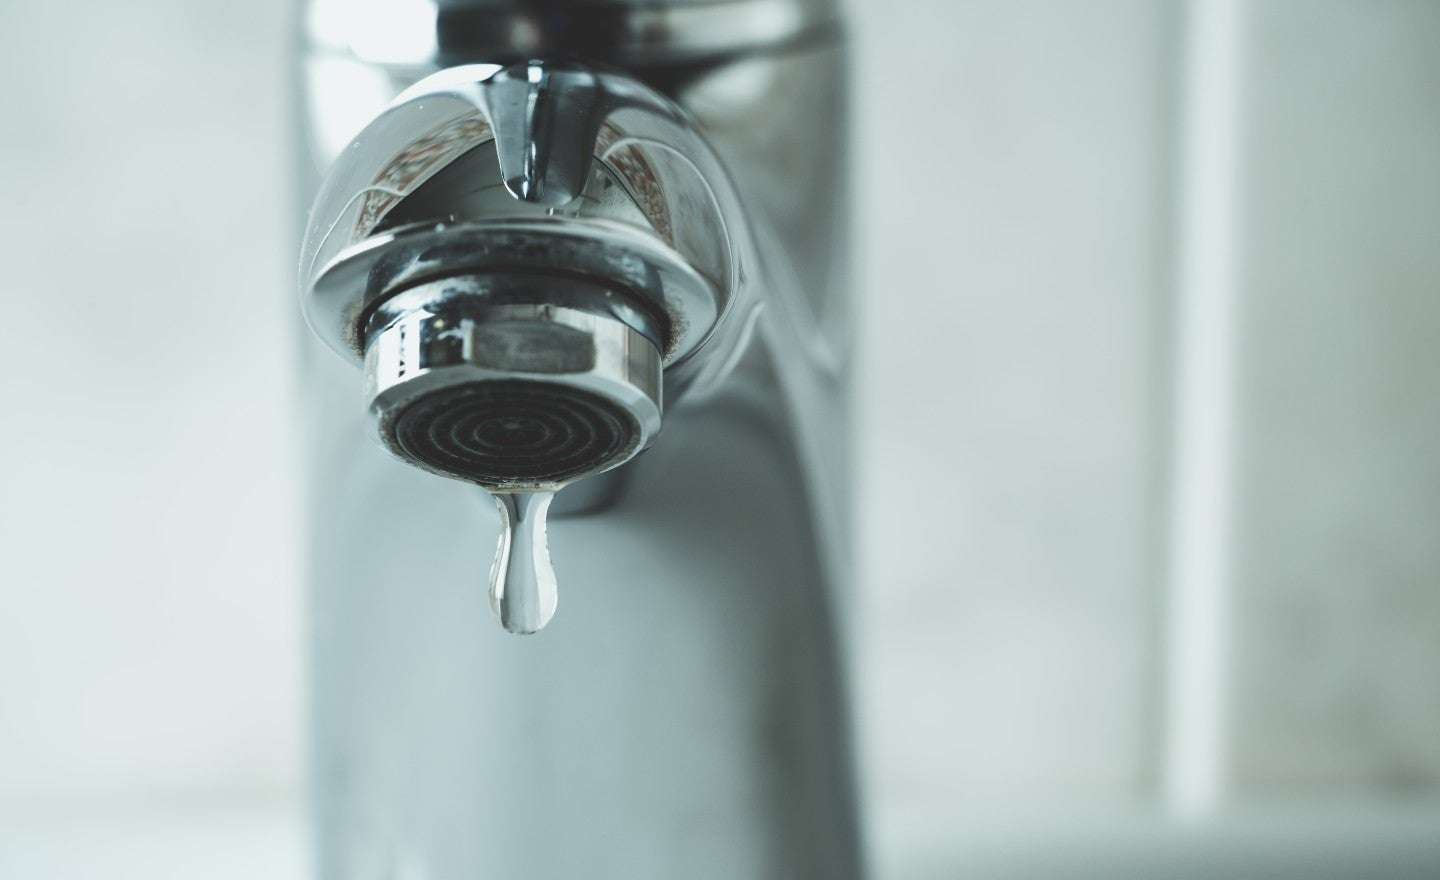 image for Virginia passes legislation designating water as a basic human right